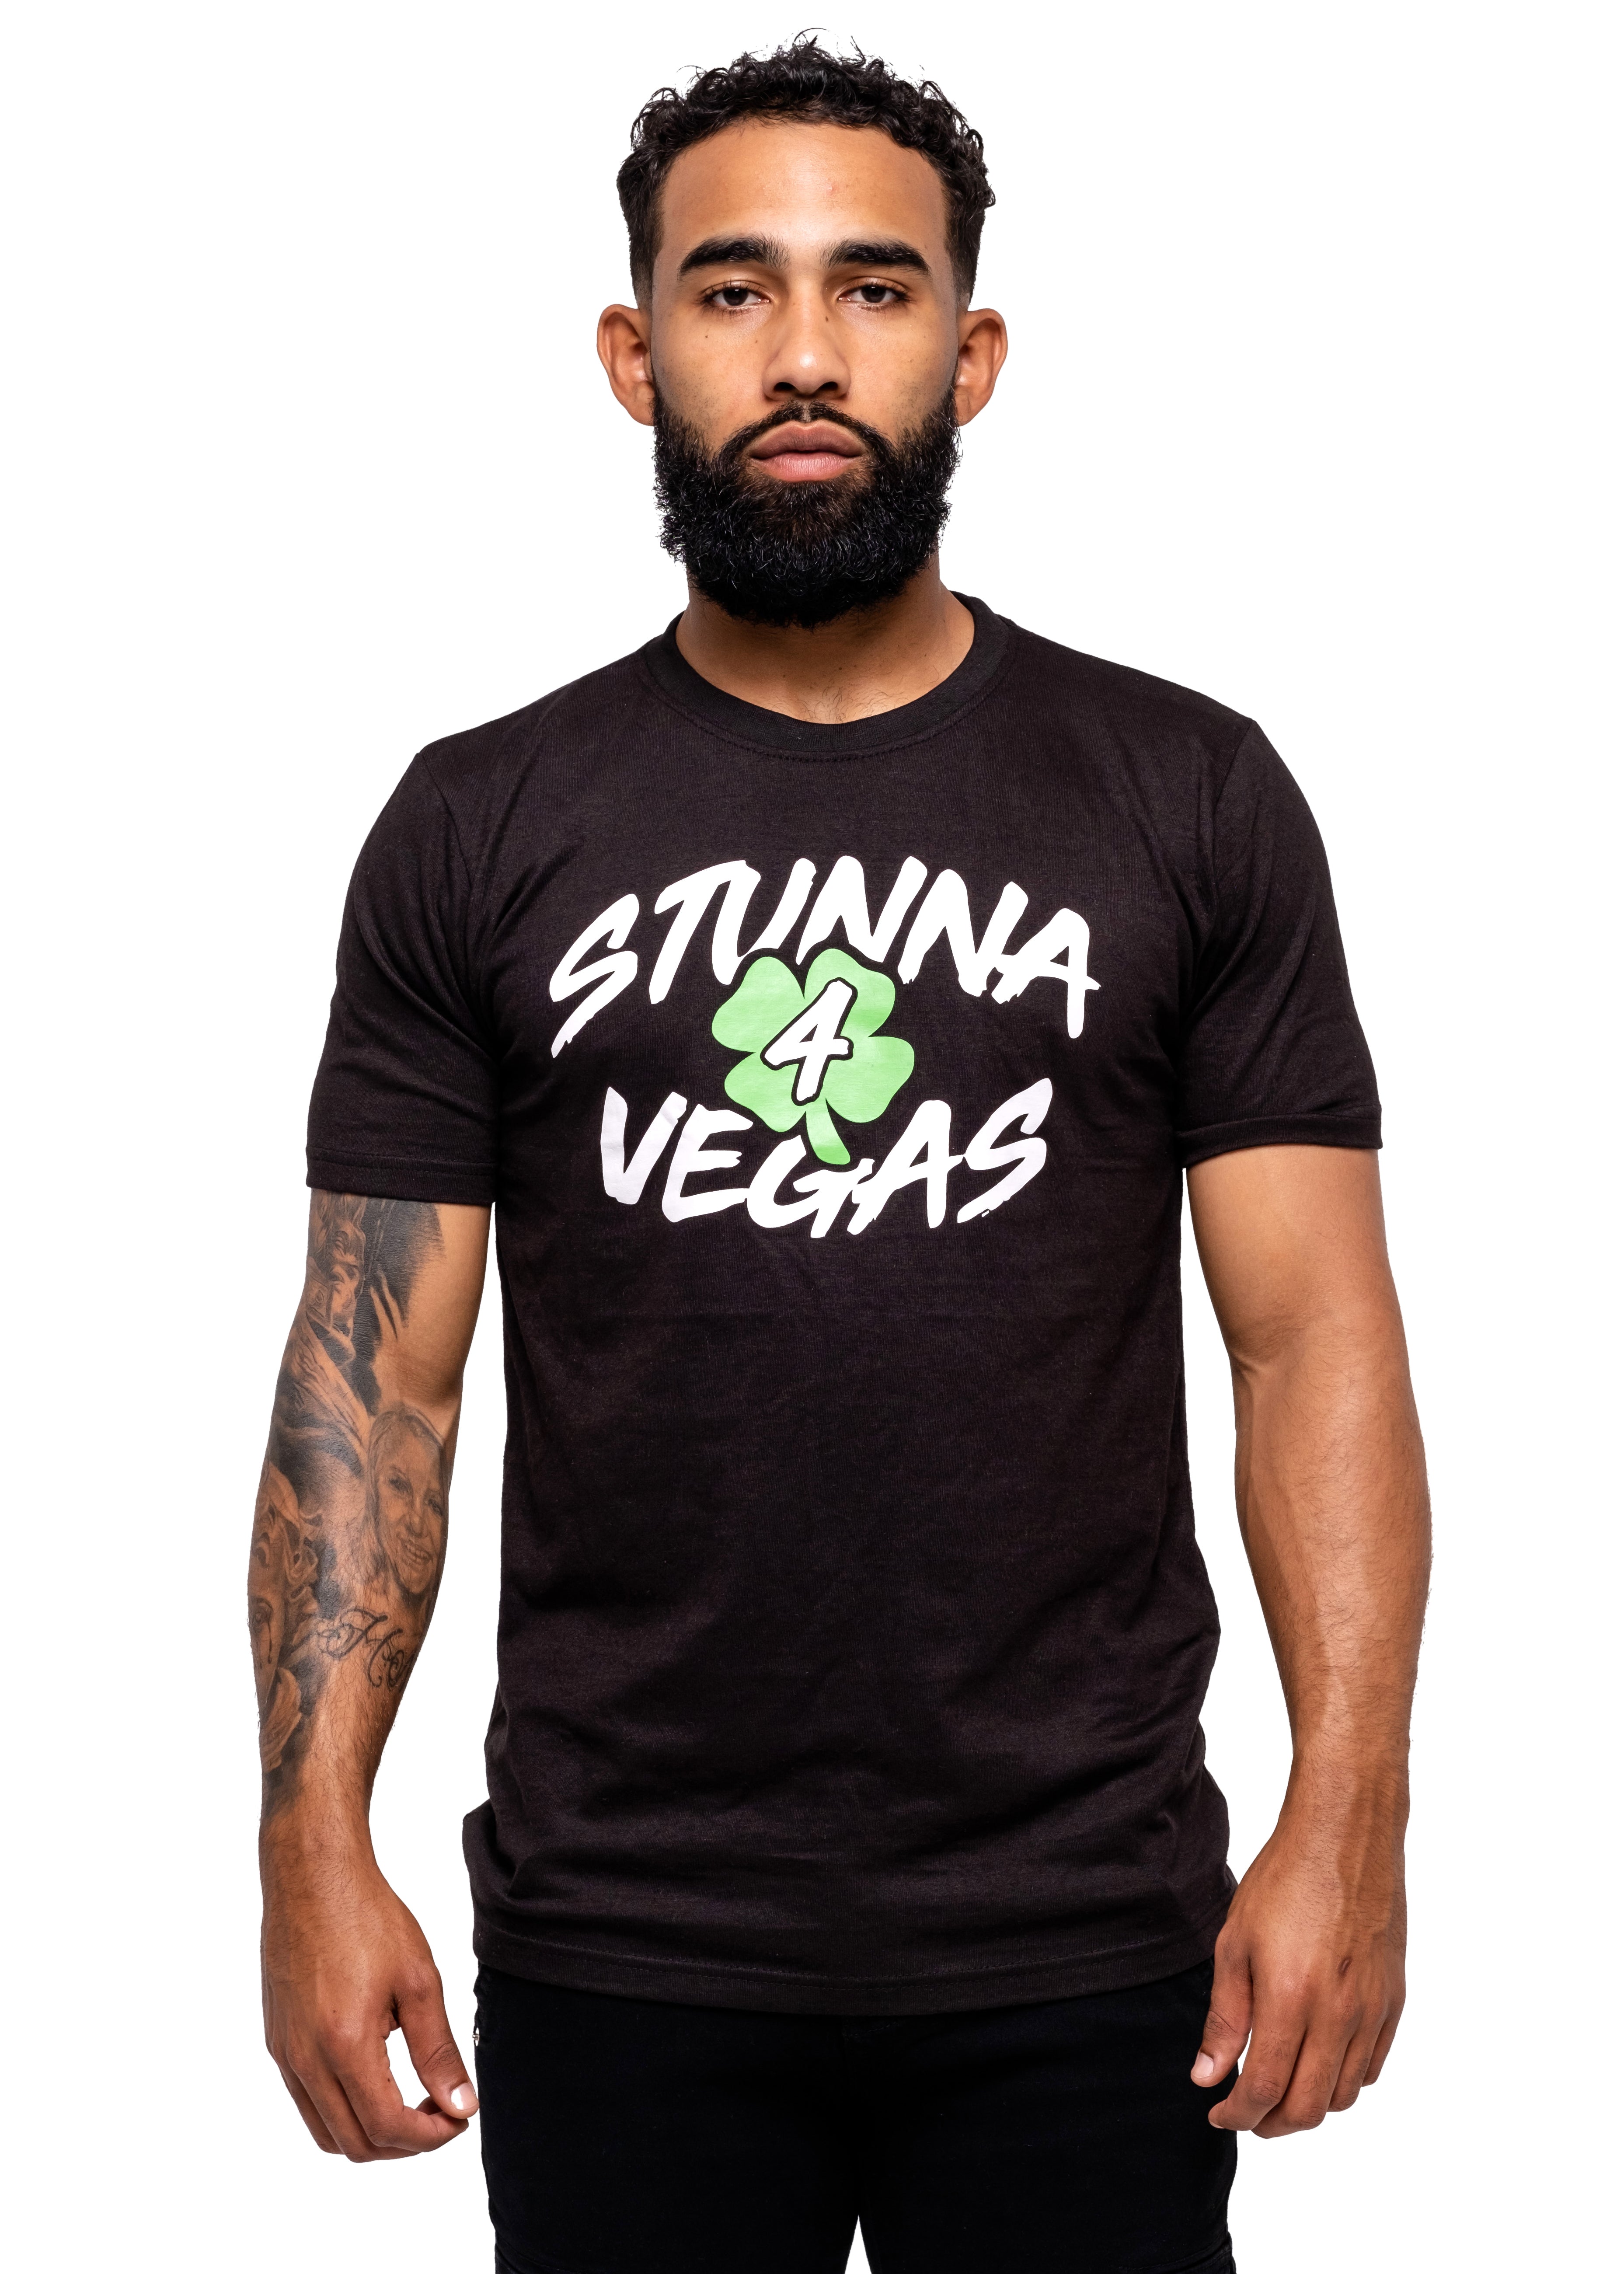 Stunna 4 Vegas Shirt